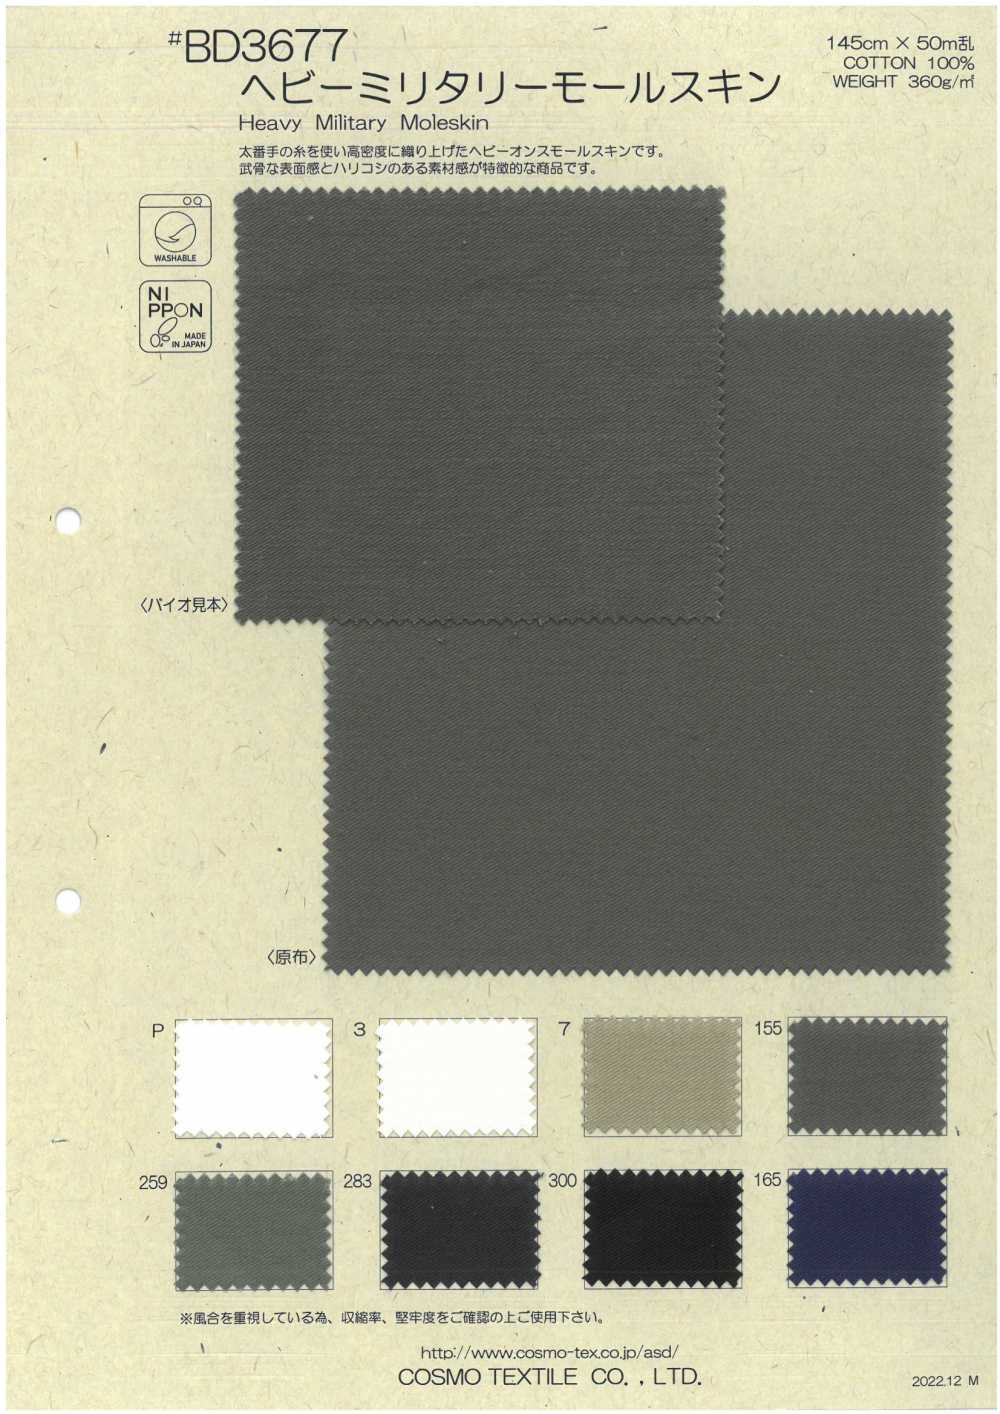 BD3677 Heavy Military Moleskin[Textile / Fabric] COSMO TEXTILE